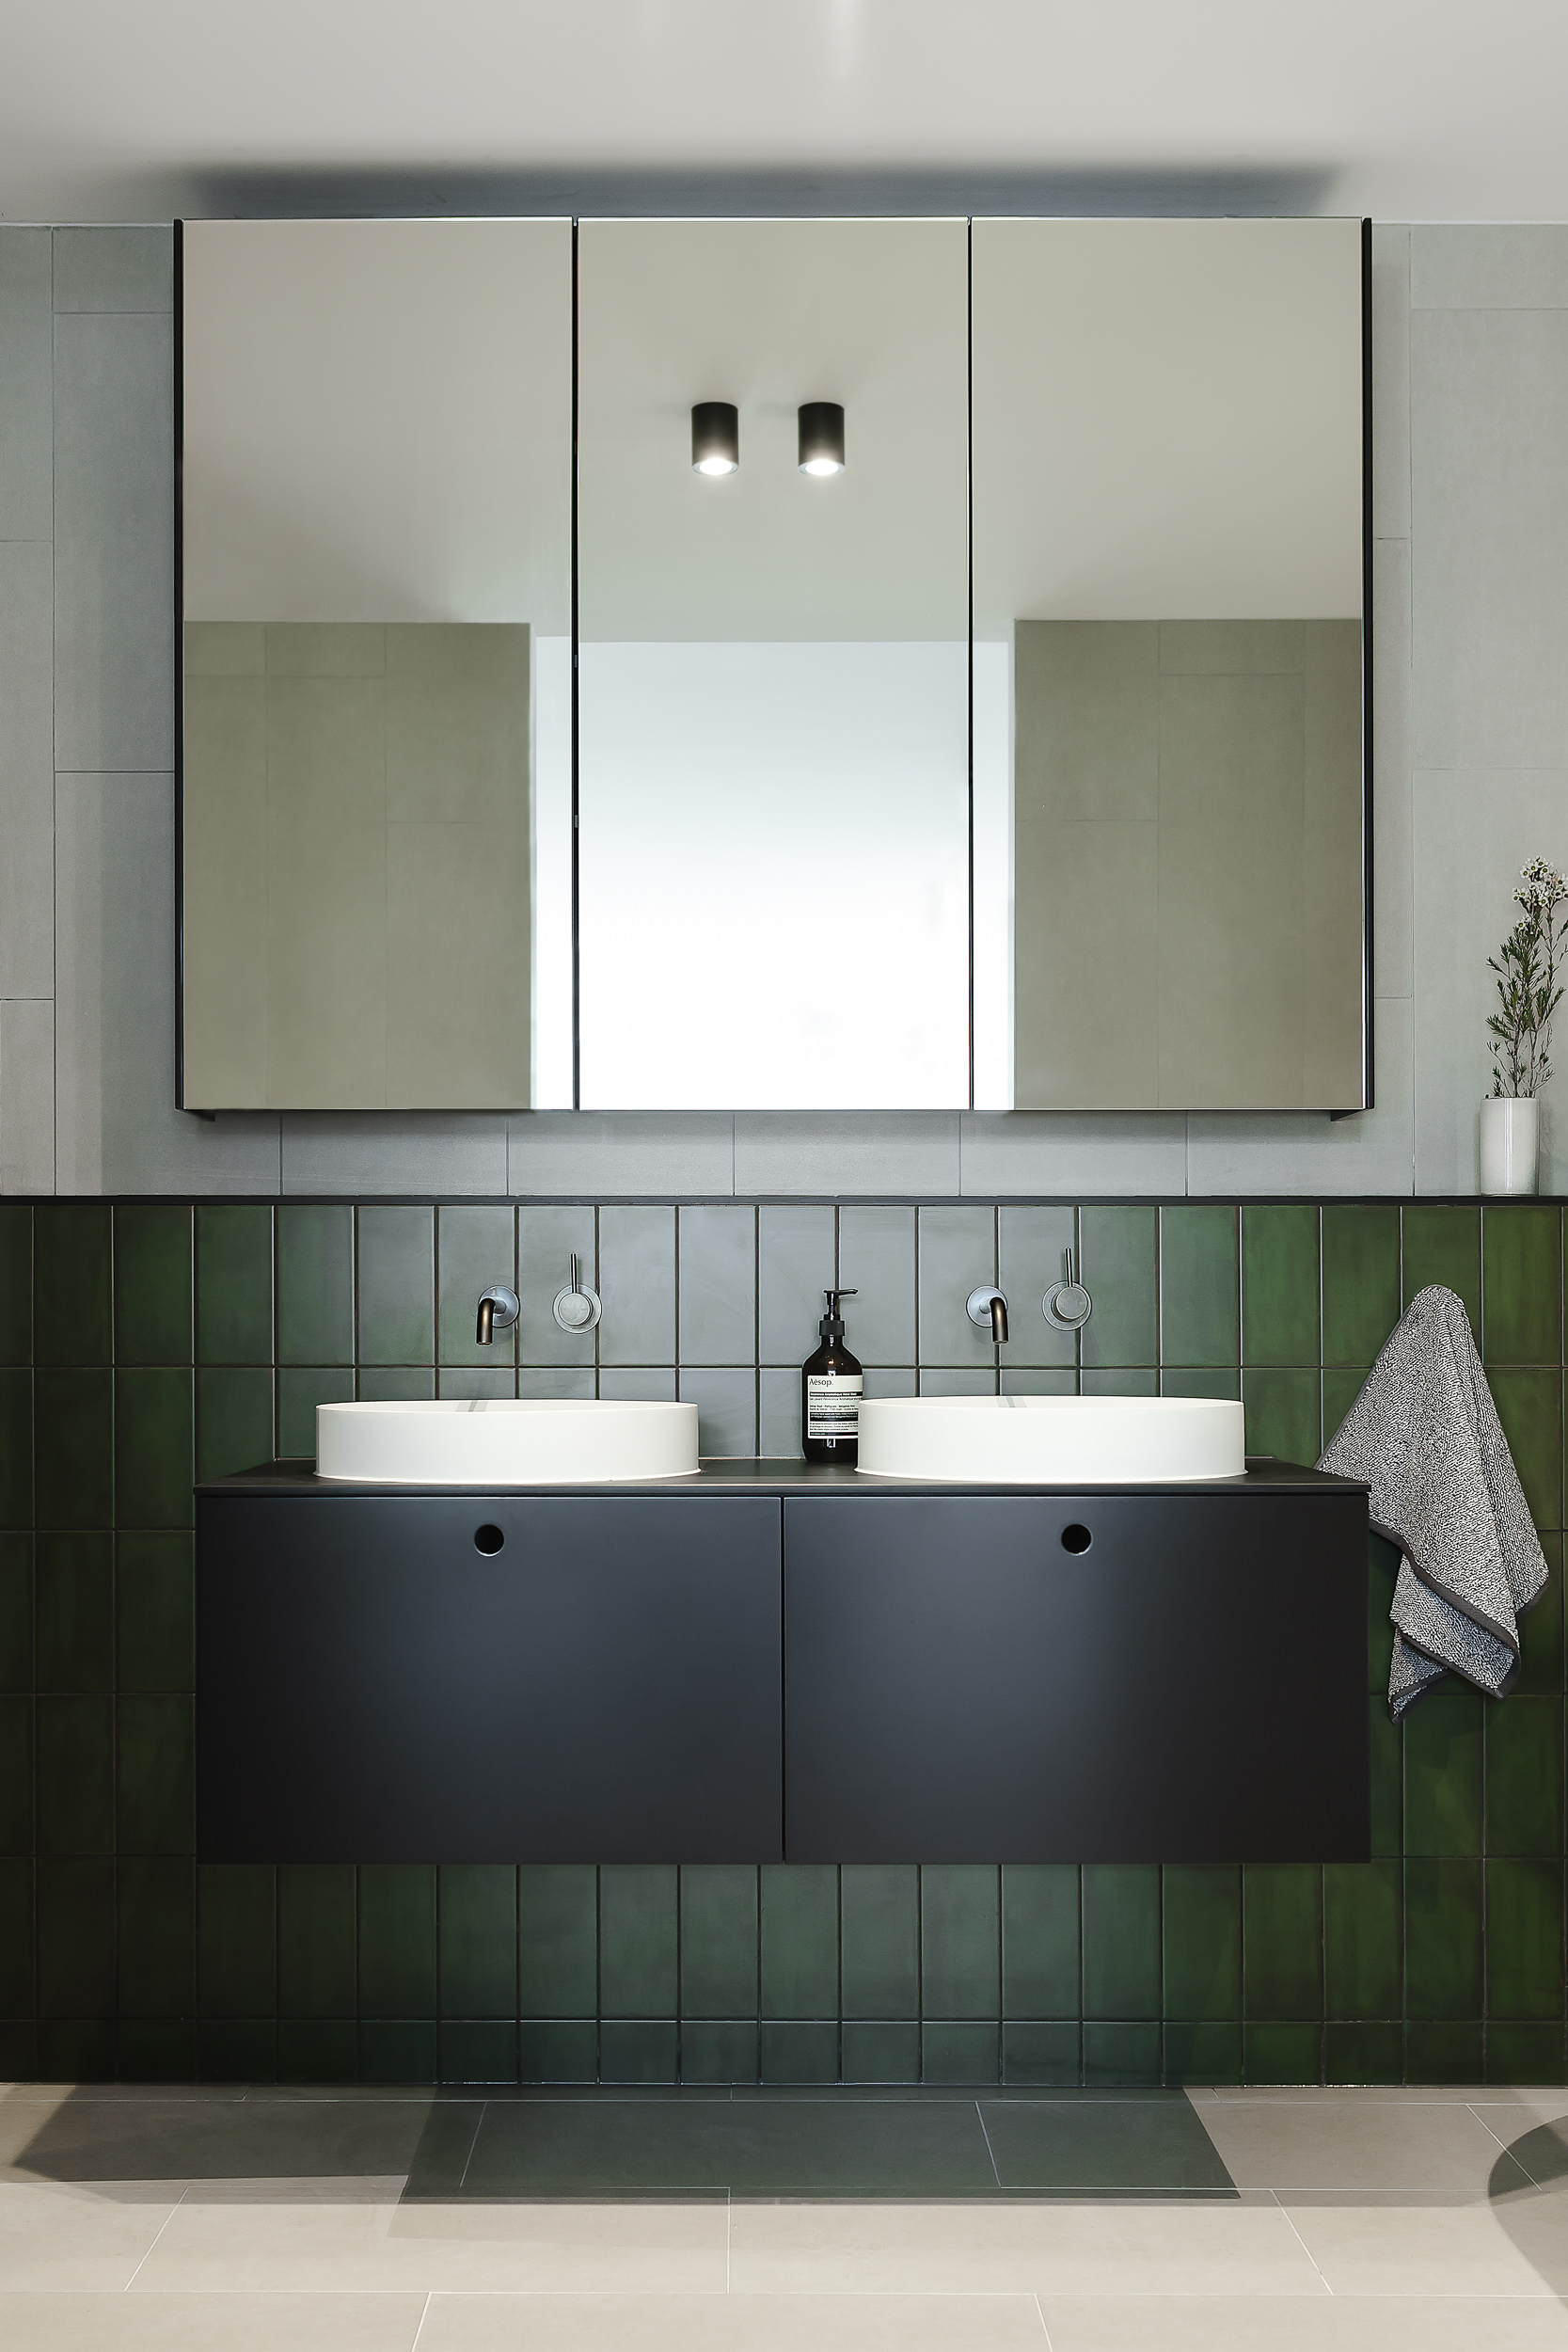 Brompton residential construction bathroom sink mirror